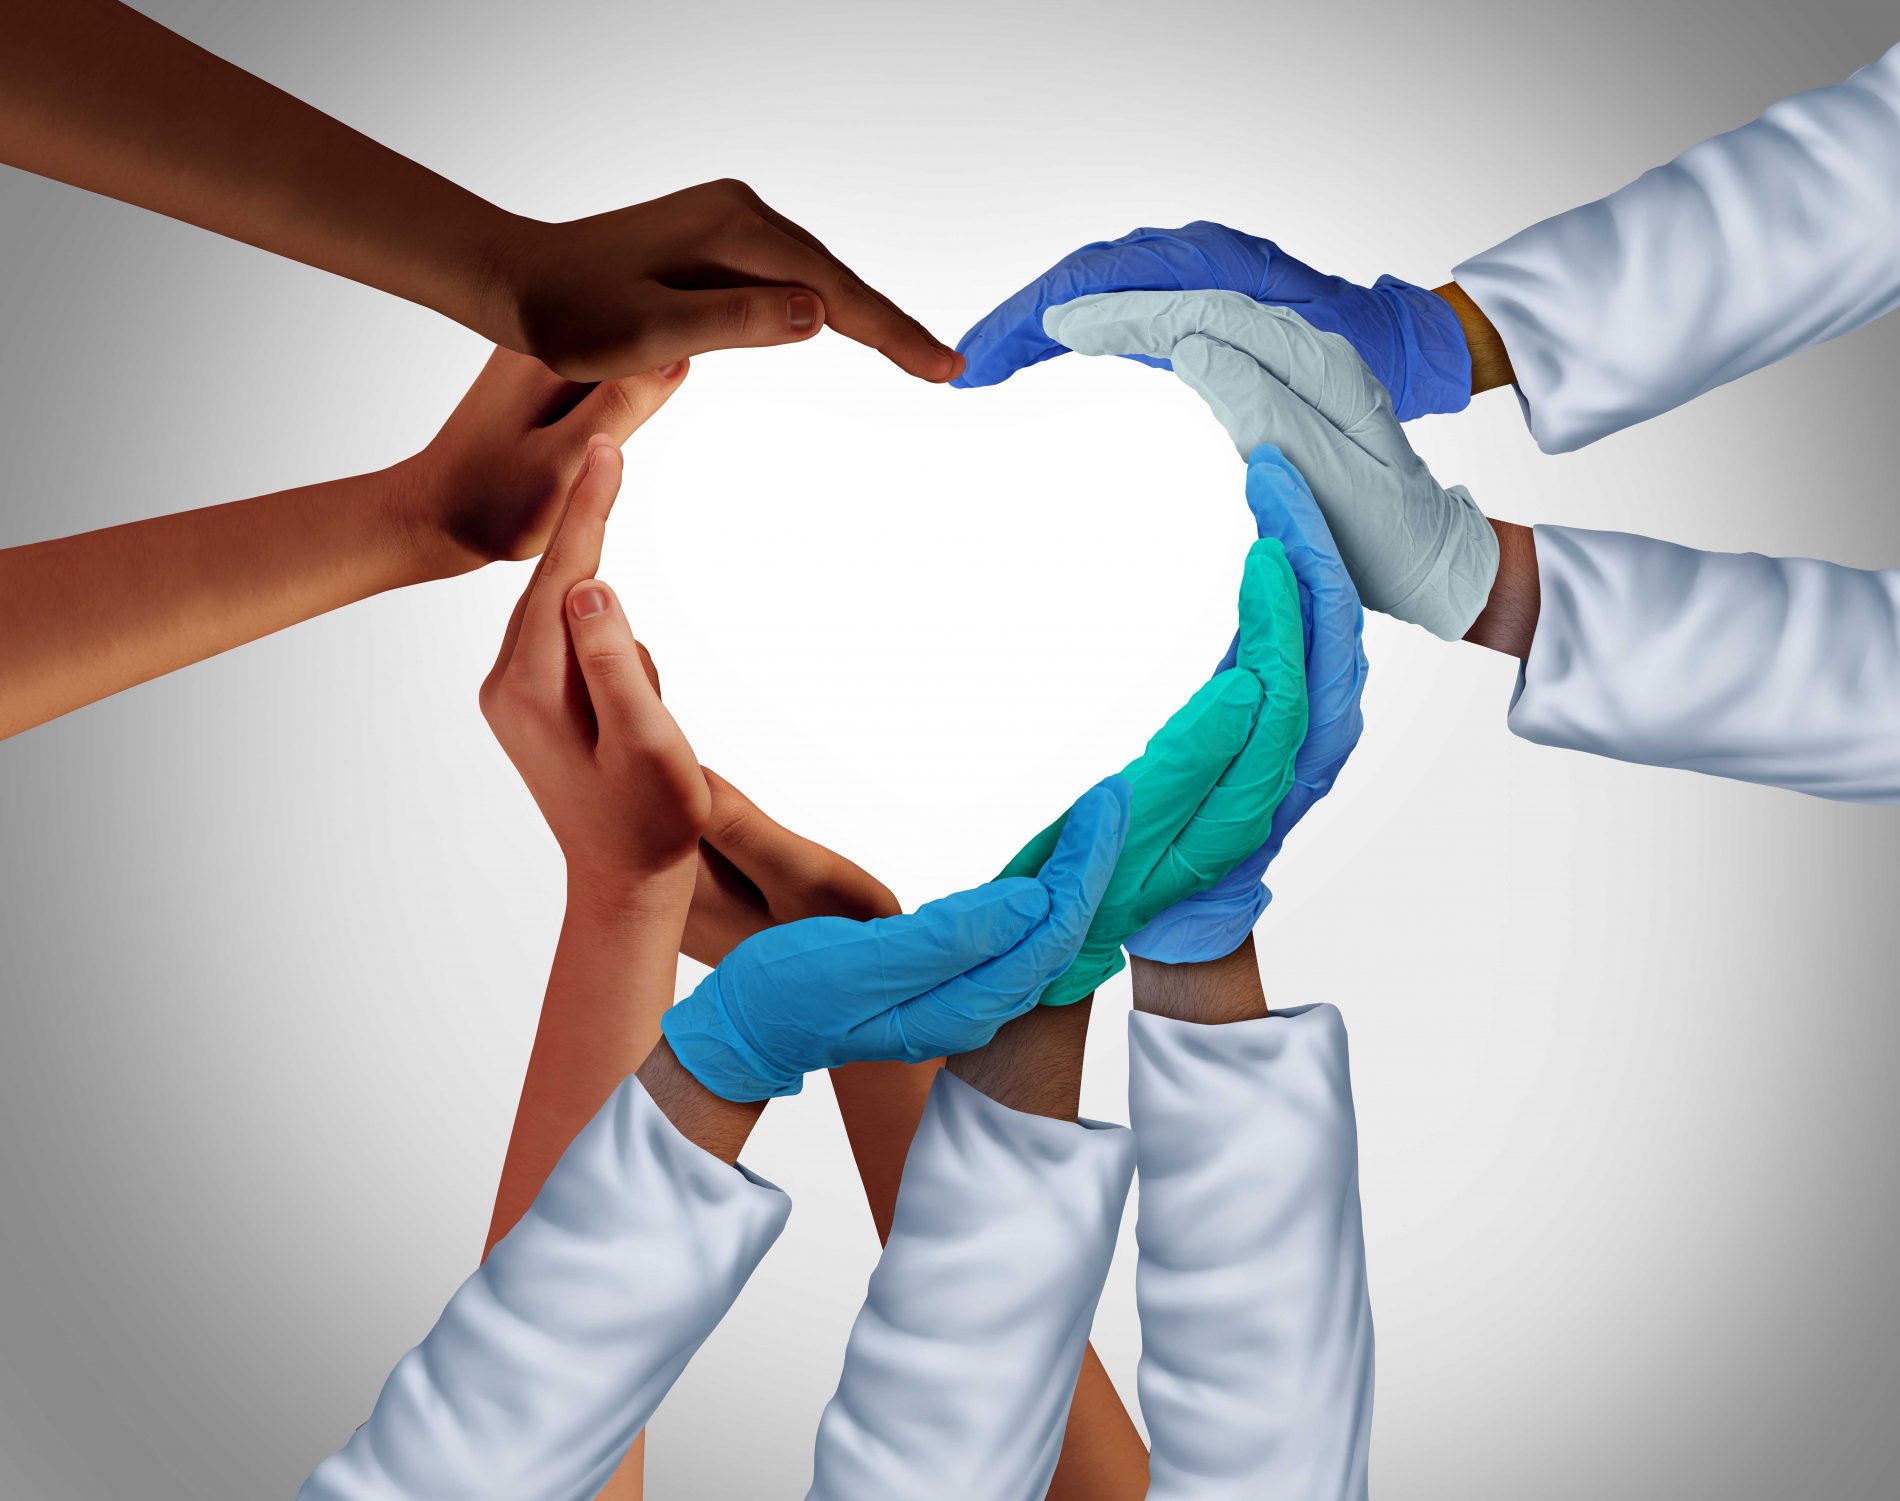 Clincal team member's hands form the shape of a heart.